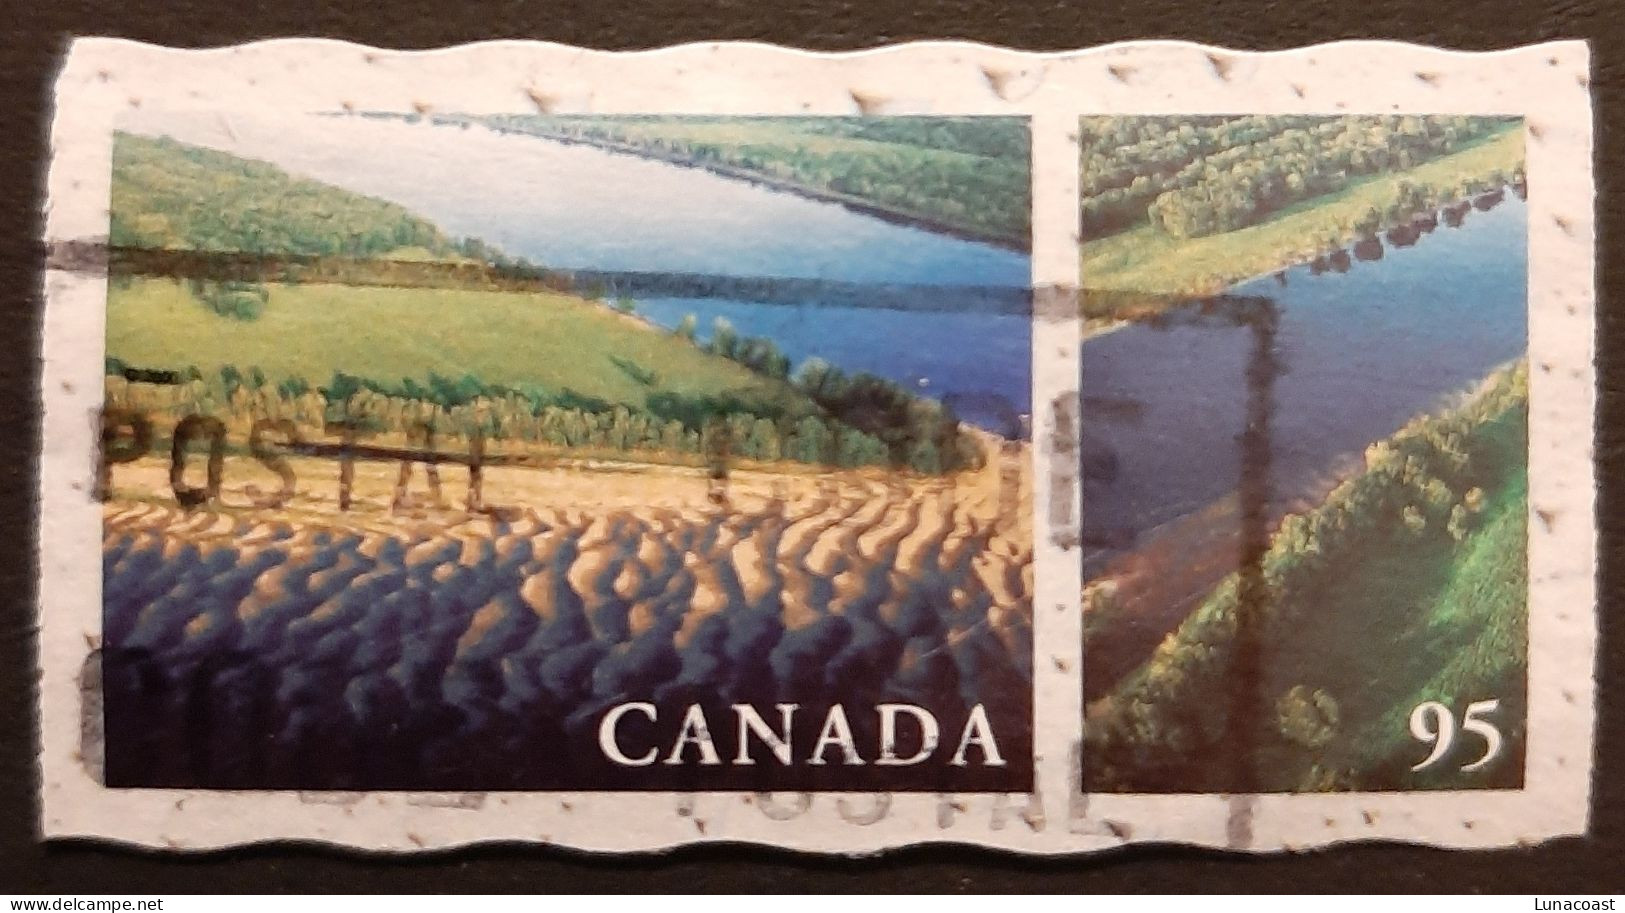 Canada 2003  USED  Sc1855c   95c  Fresh Waters, Saint John River - Gebruikt